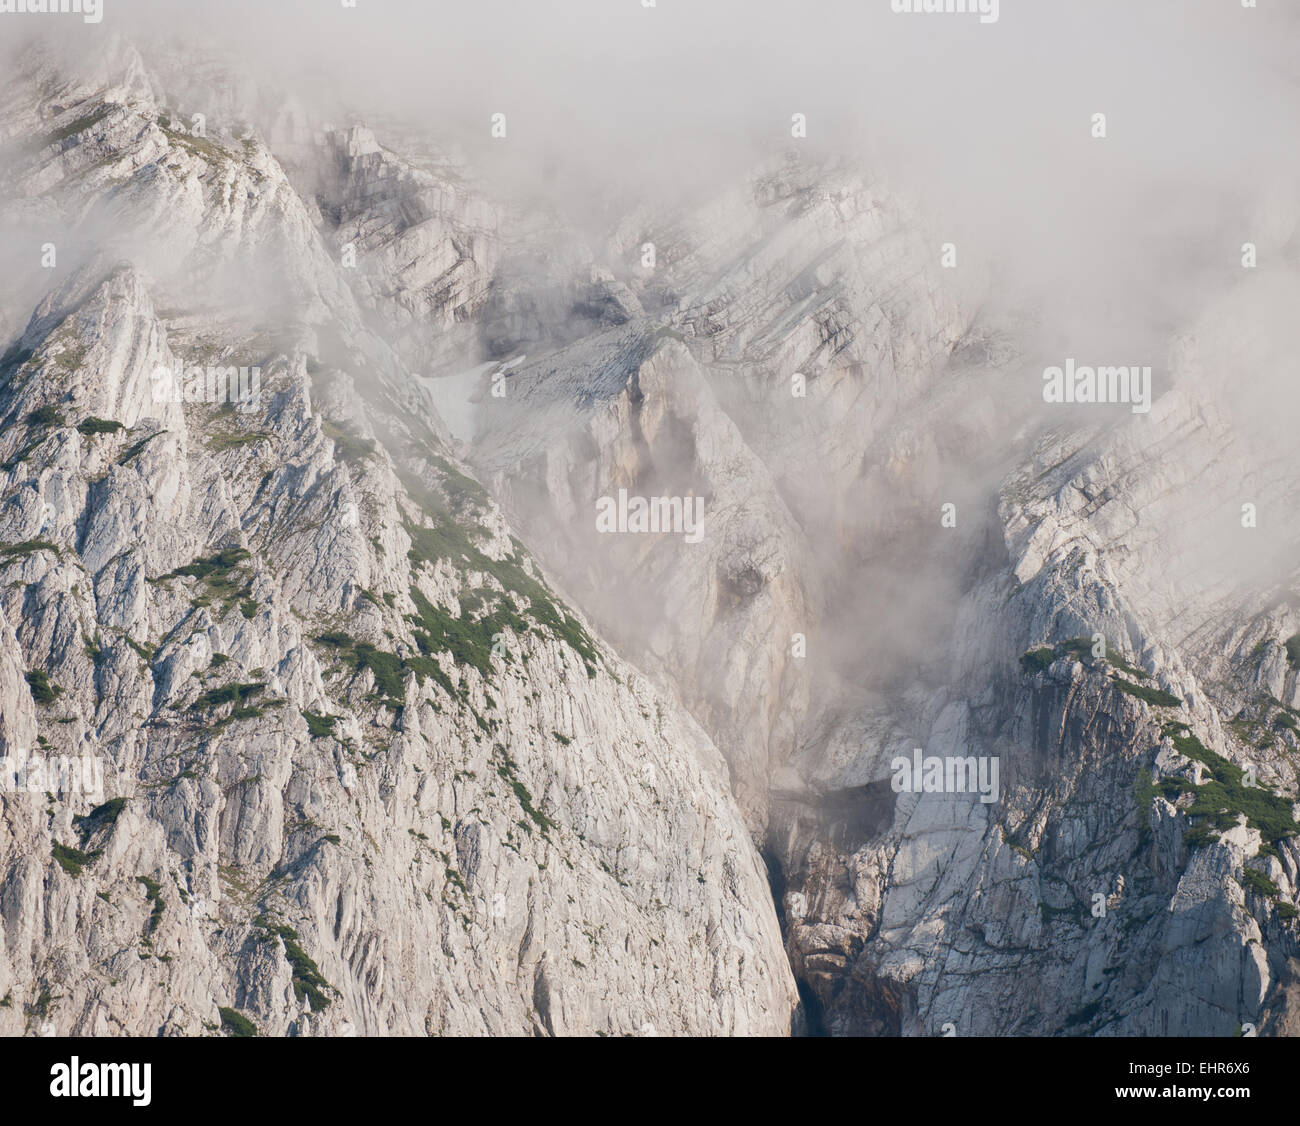 Grimming im Nebel, Salzkammergut, Stiria, Austria Foto Stock